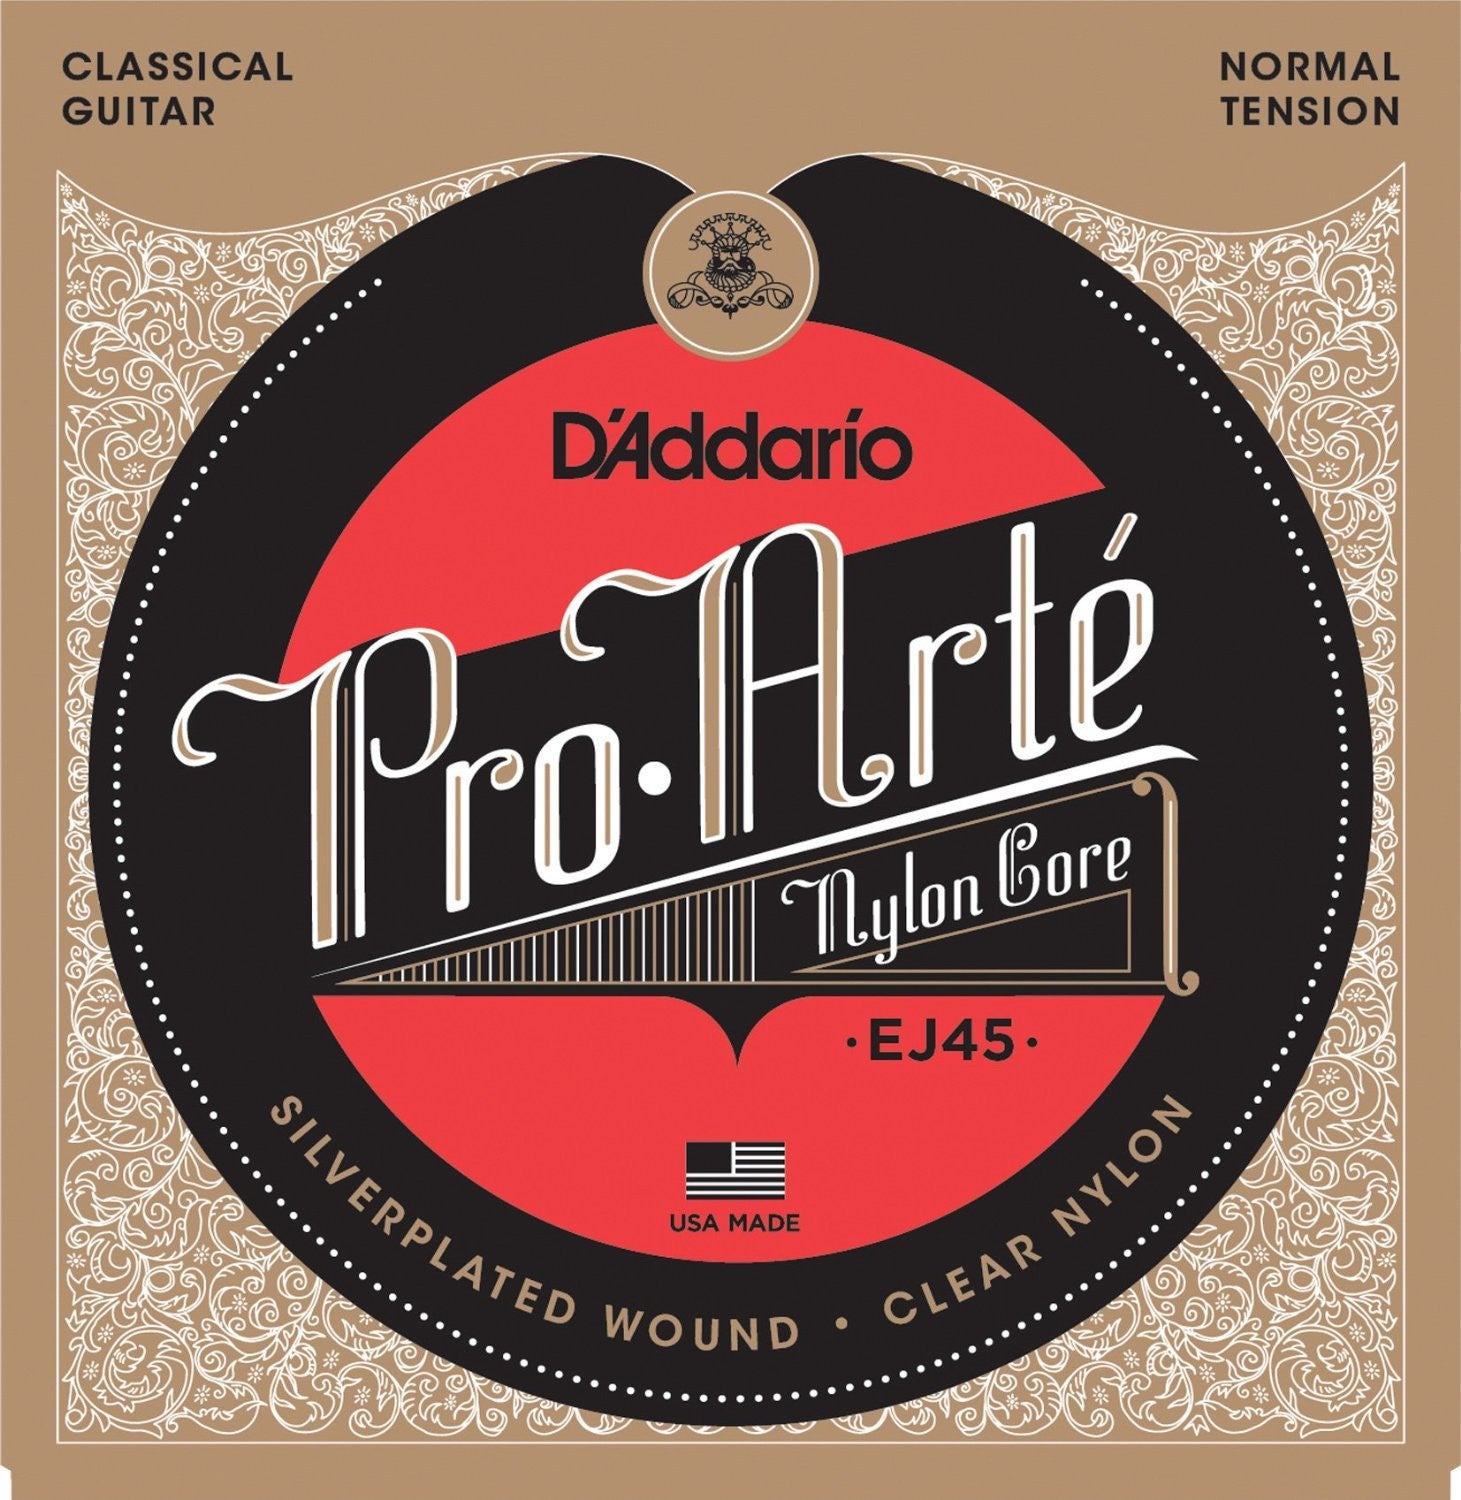 D'Addario Pro Arte Normal Classical Strings